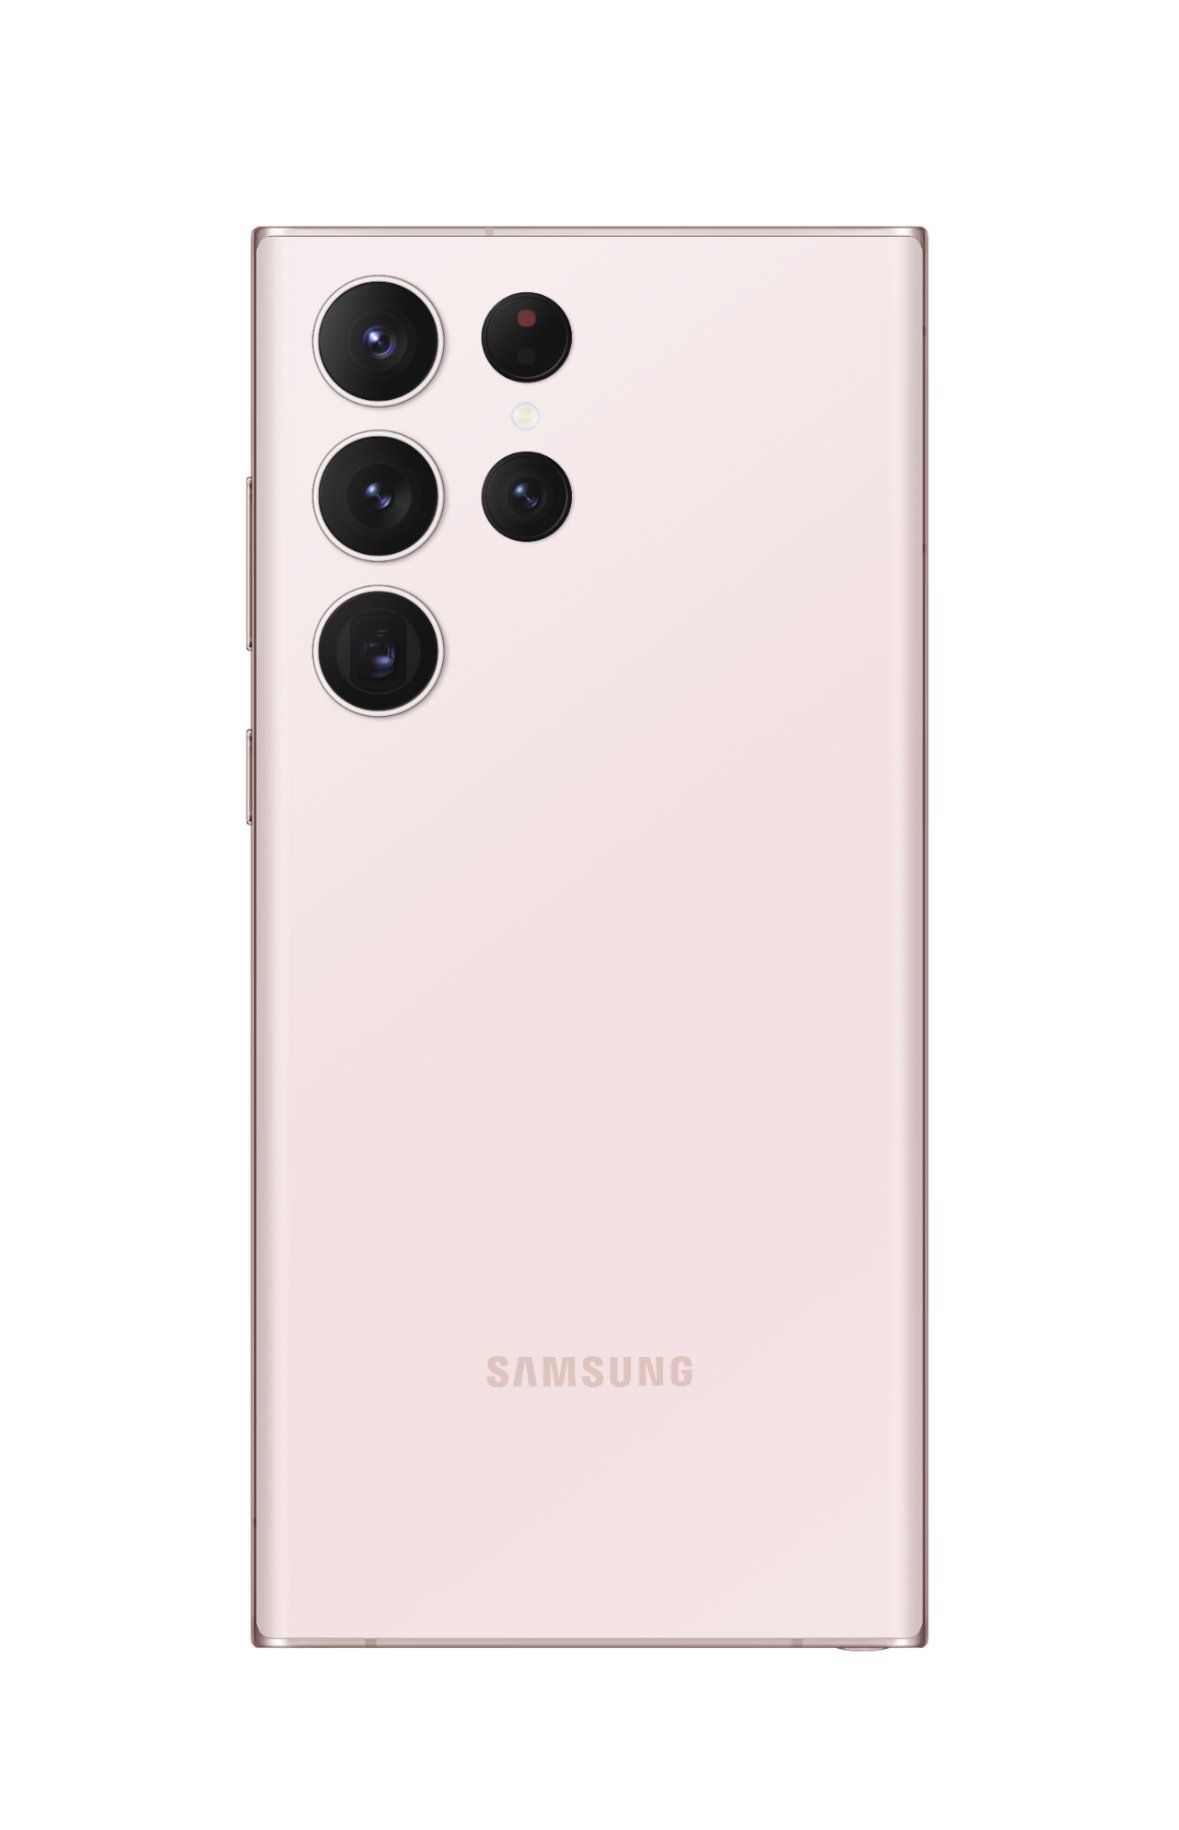 Samsung มือลั่น ! หลุดภาพทีเซอร์ Galaxy S23 เตรียมเปิดตัว 1 กุมภาพันธ์นี้